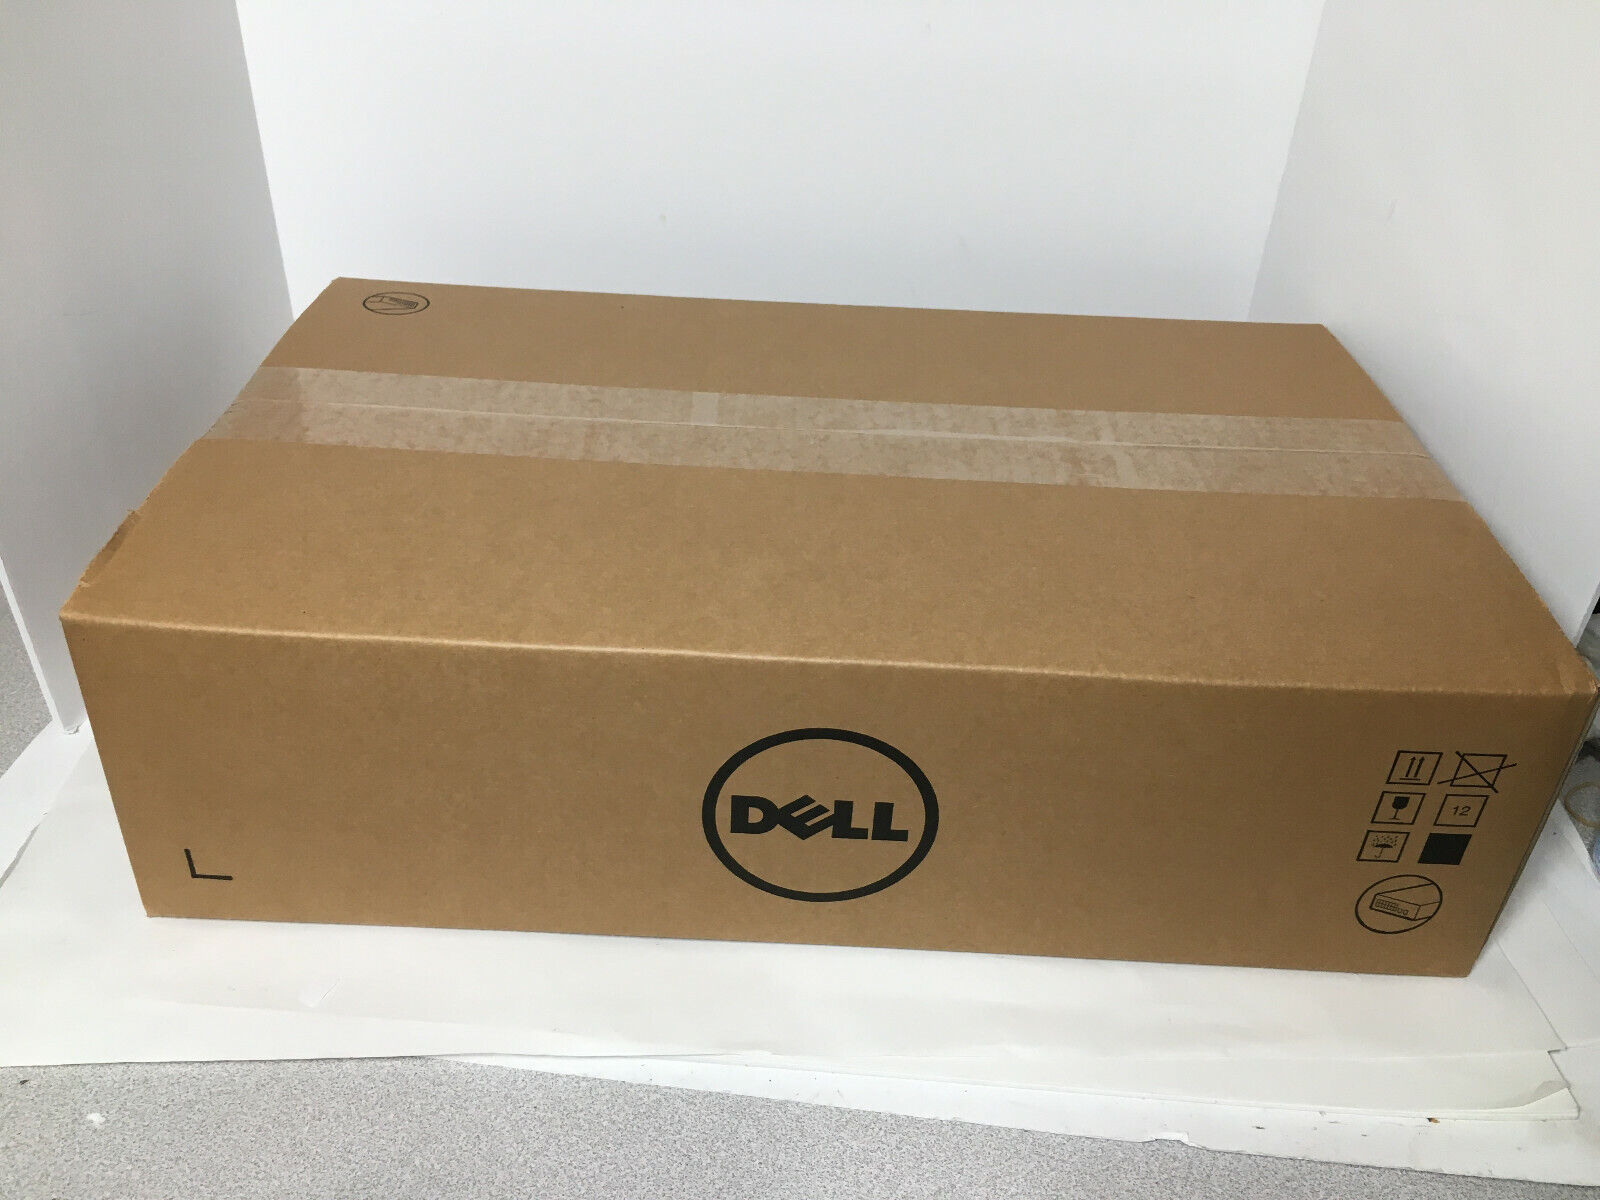 New Dell SonicWALL SRA 1600 Secure Remote Access Appliance 1RK23-0A0 5 user Lic.